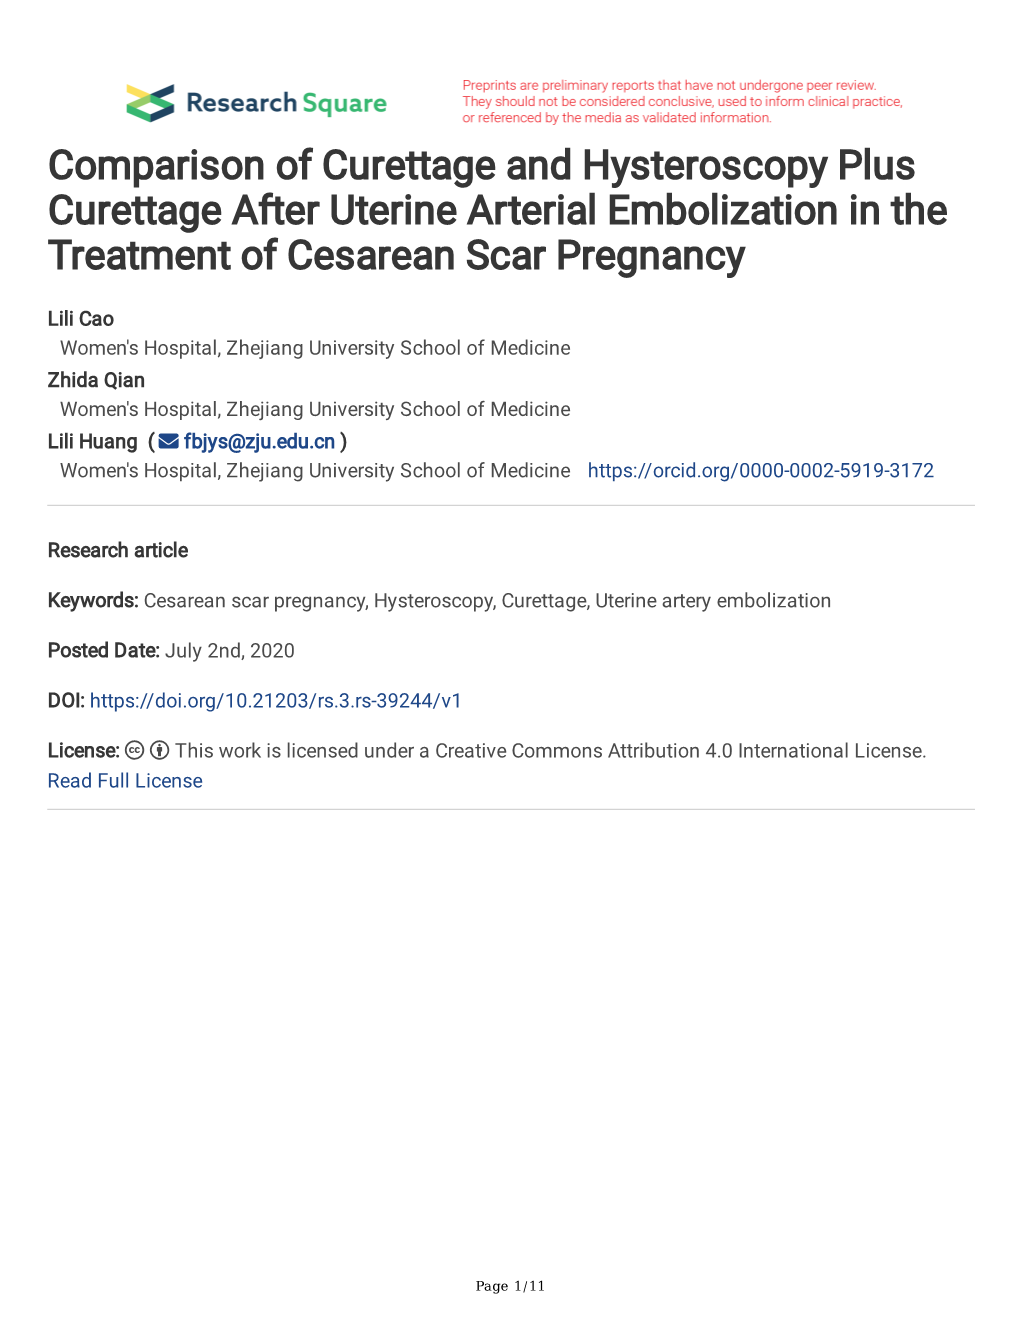 Comparison of Curettage and Hysteroscopy Plus Curettage After Uterine Arterial Embolization in the Treatment of Cesarean Scar Pregnancy